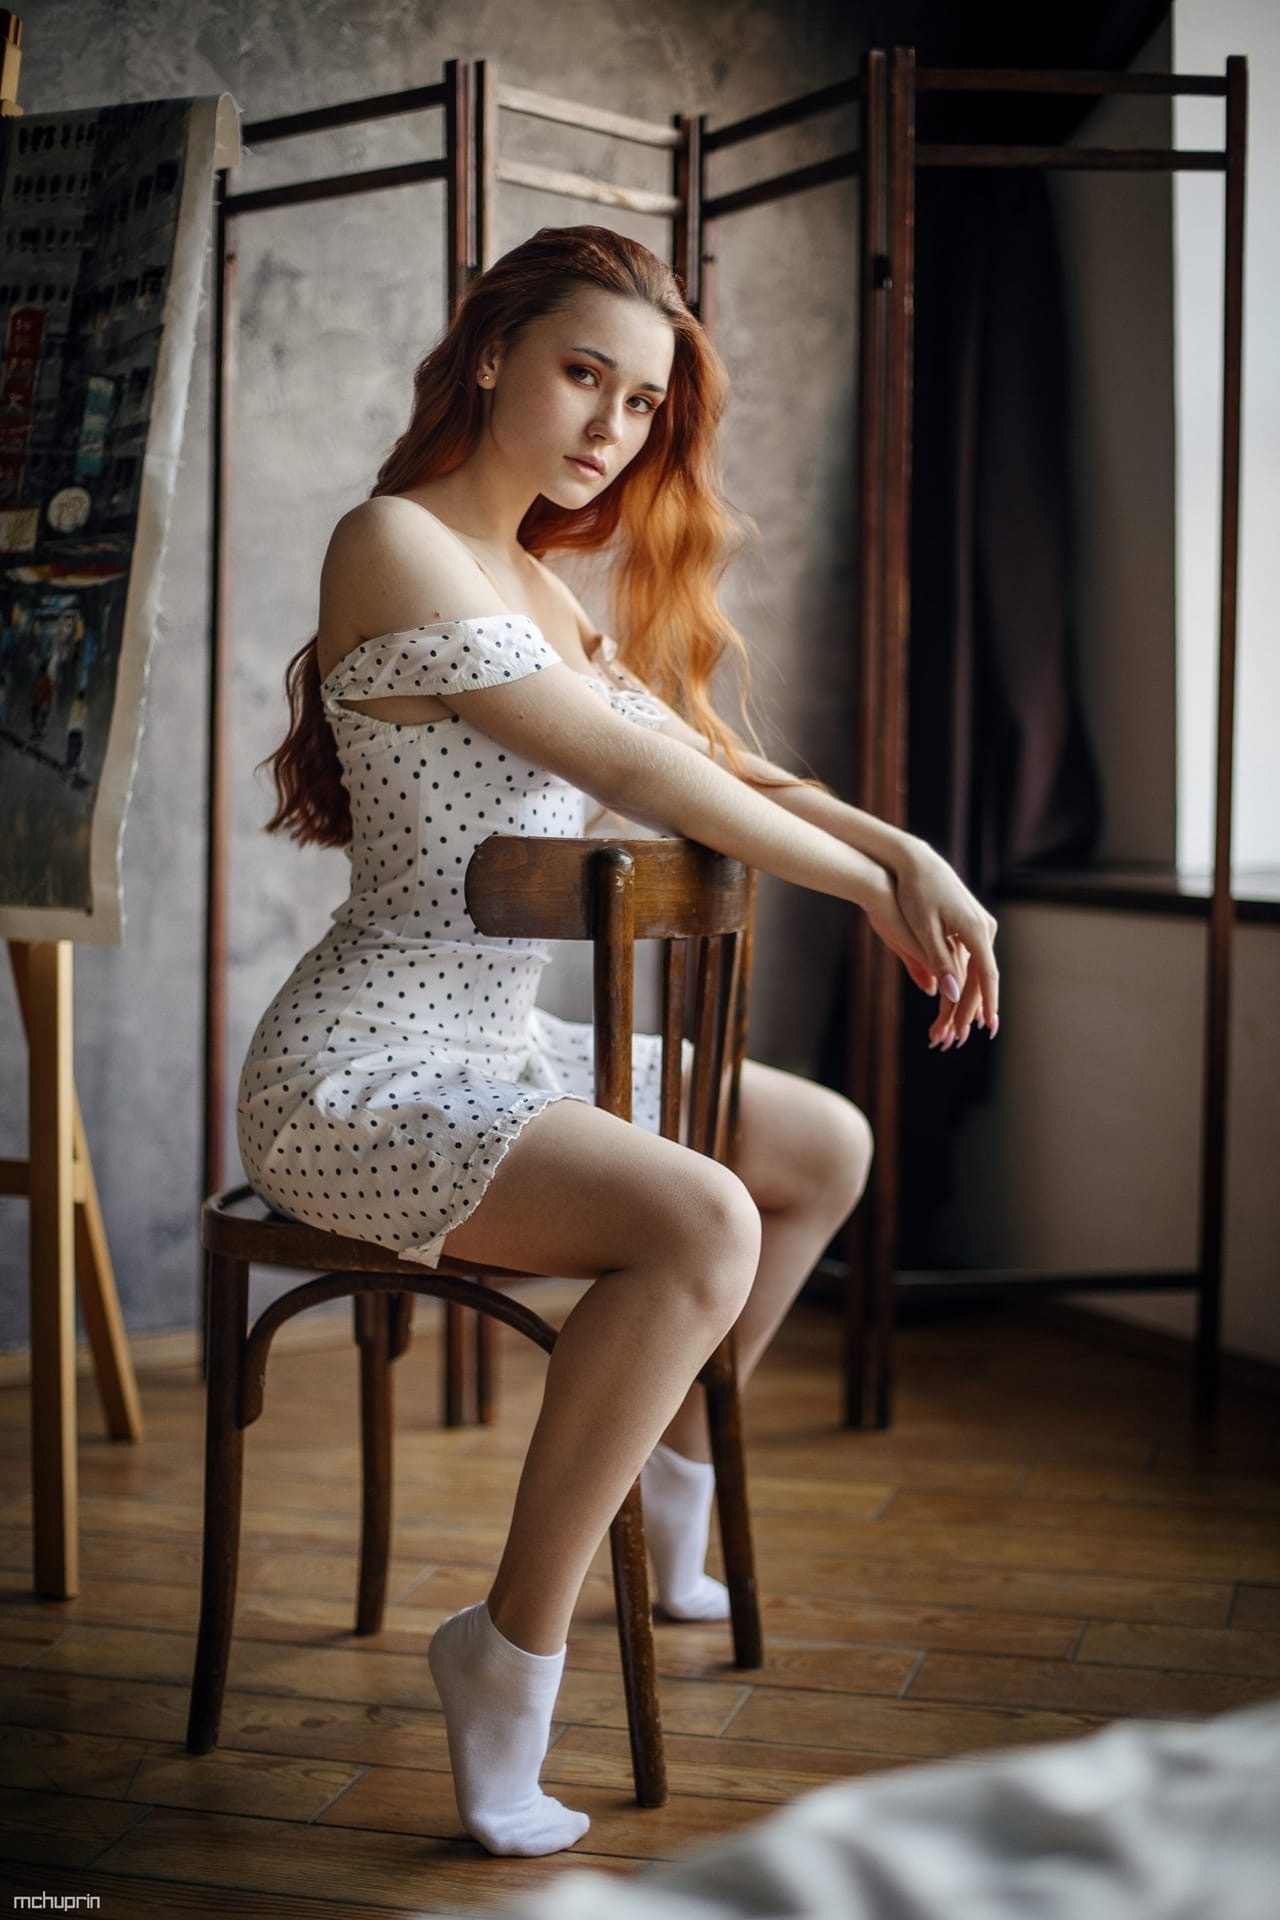 Maksim Chuprin Women Chair Redhead Sitting Women Indoors Sitting Backwards Model Sitting On Chair Po 1280x1920